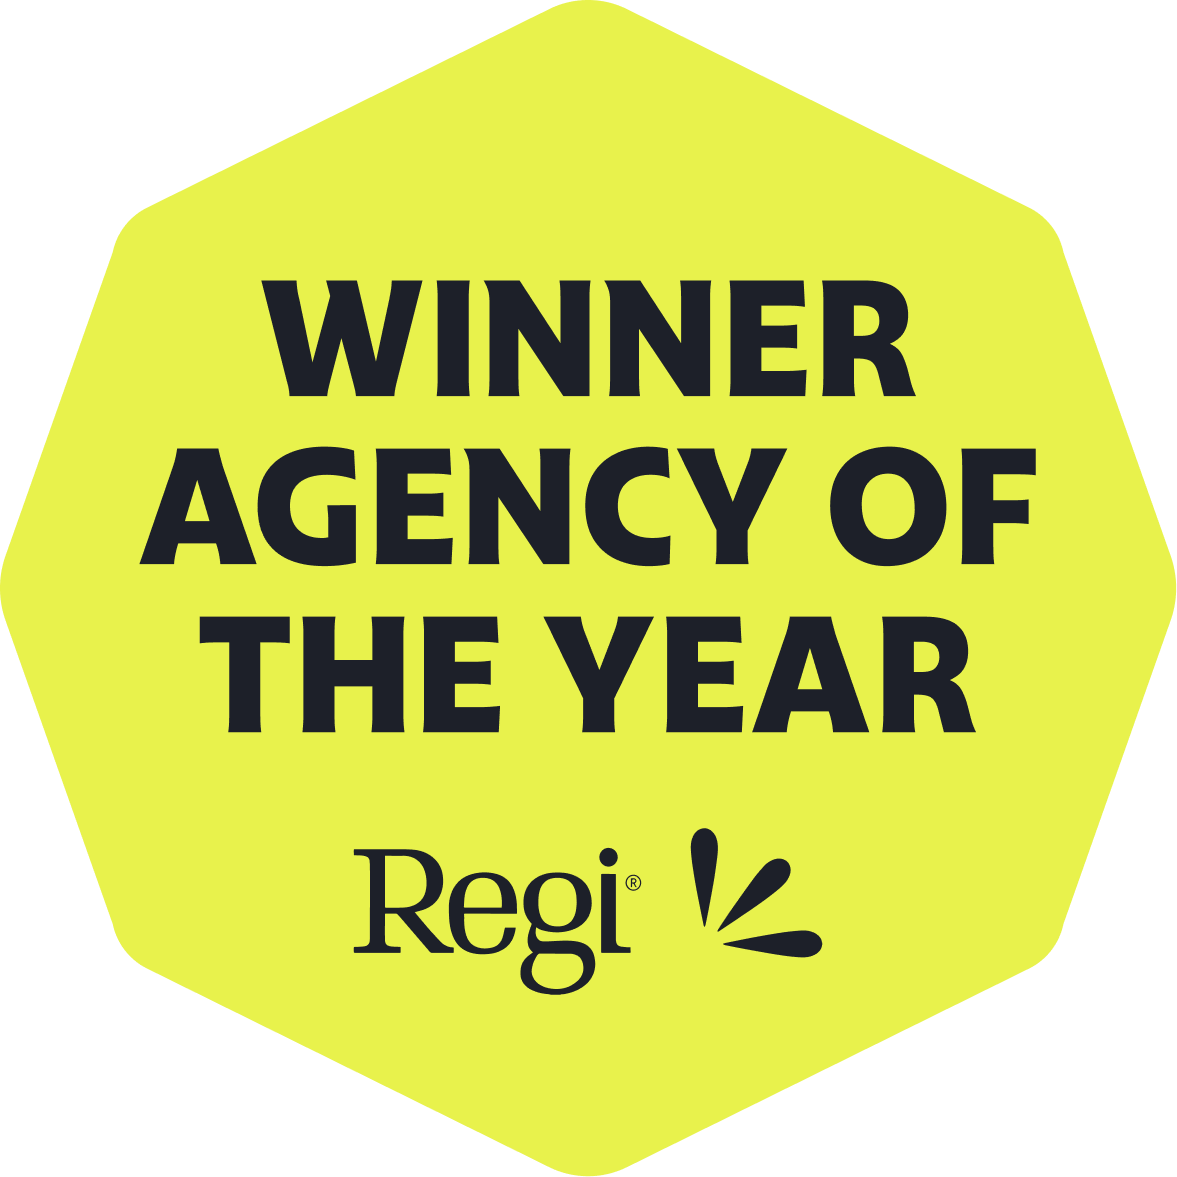 Winner agency of the year - Regi